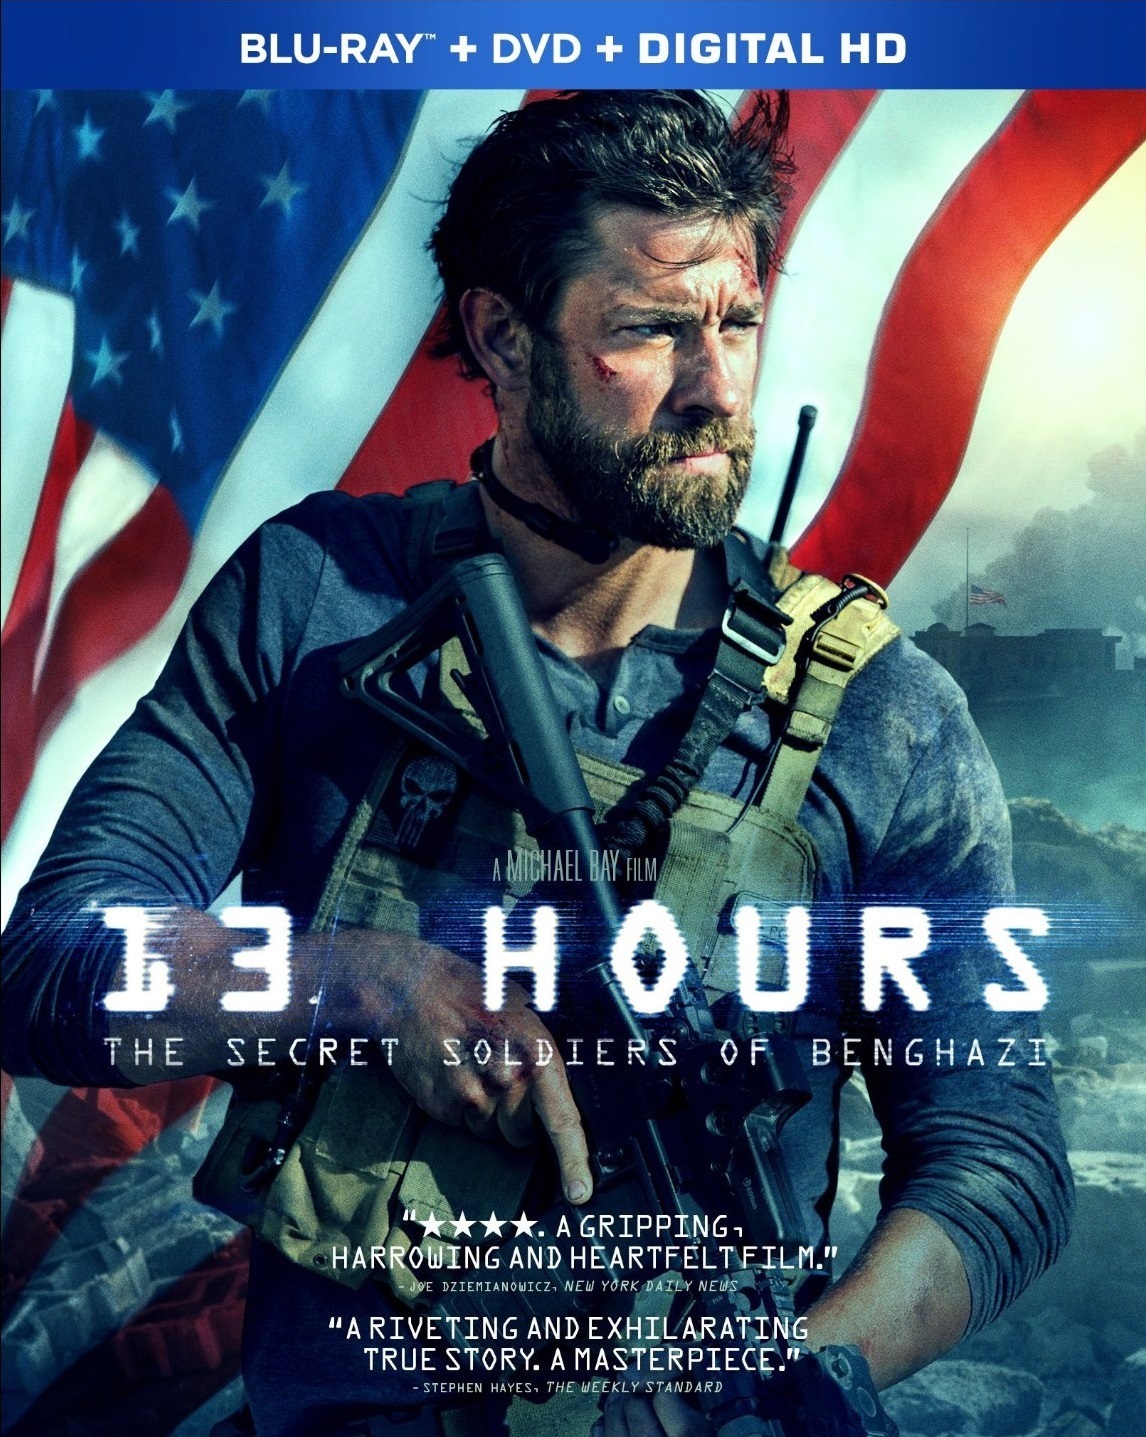 Stiahni si HD Filmy 13 hodin: Tajni vojaci z Benghazi / 13 Hours: The Secret Soldiers of Benghazi (2016)(CZ/EN)[1080p]  = CSFD 77%